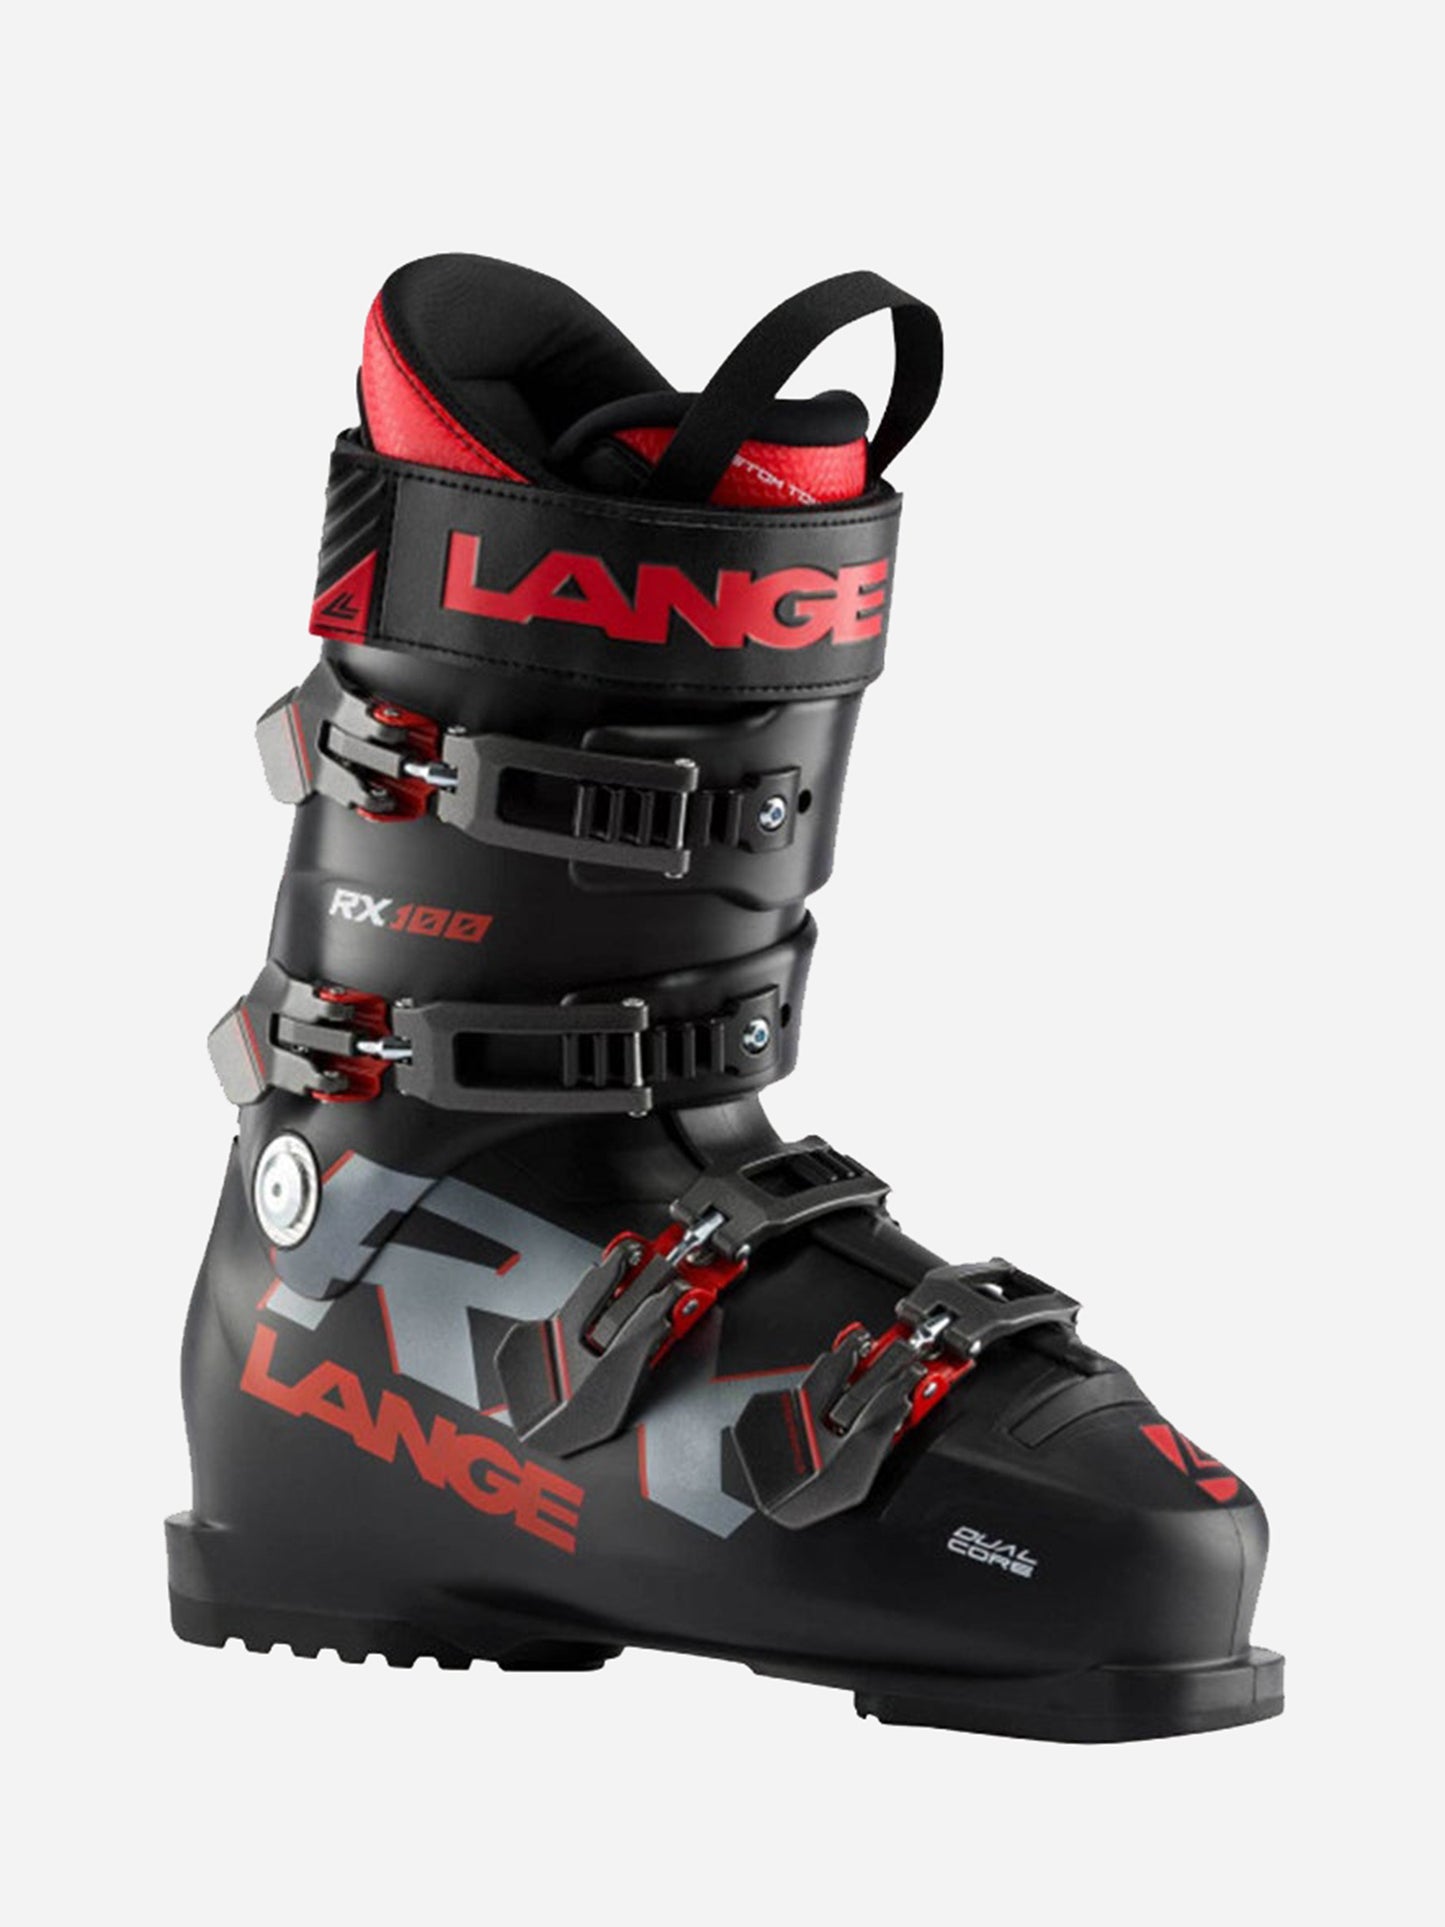 Lange RX 100 All Mountain Piste Ski Boots 2021